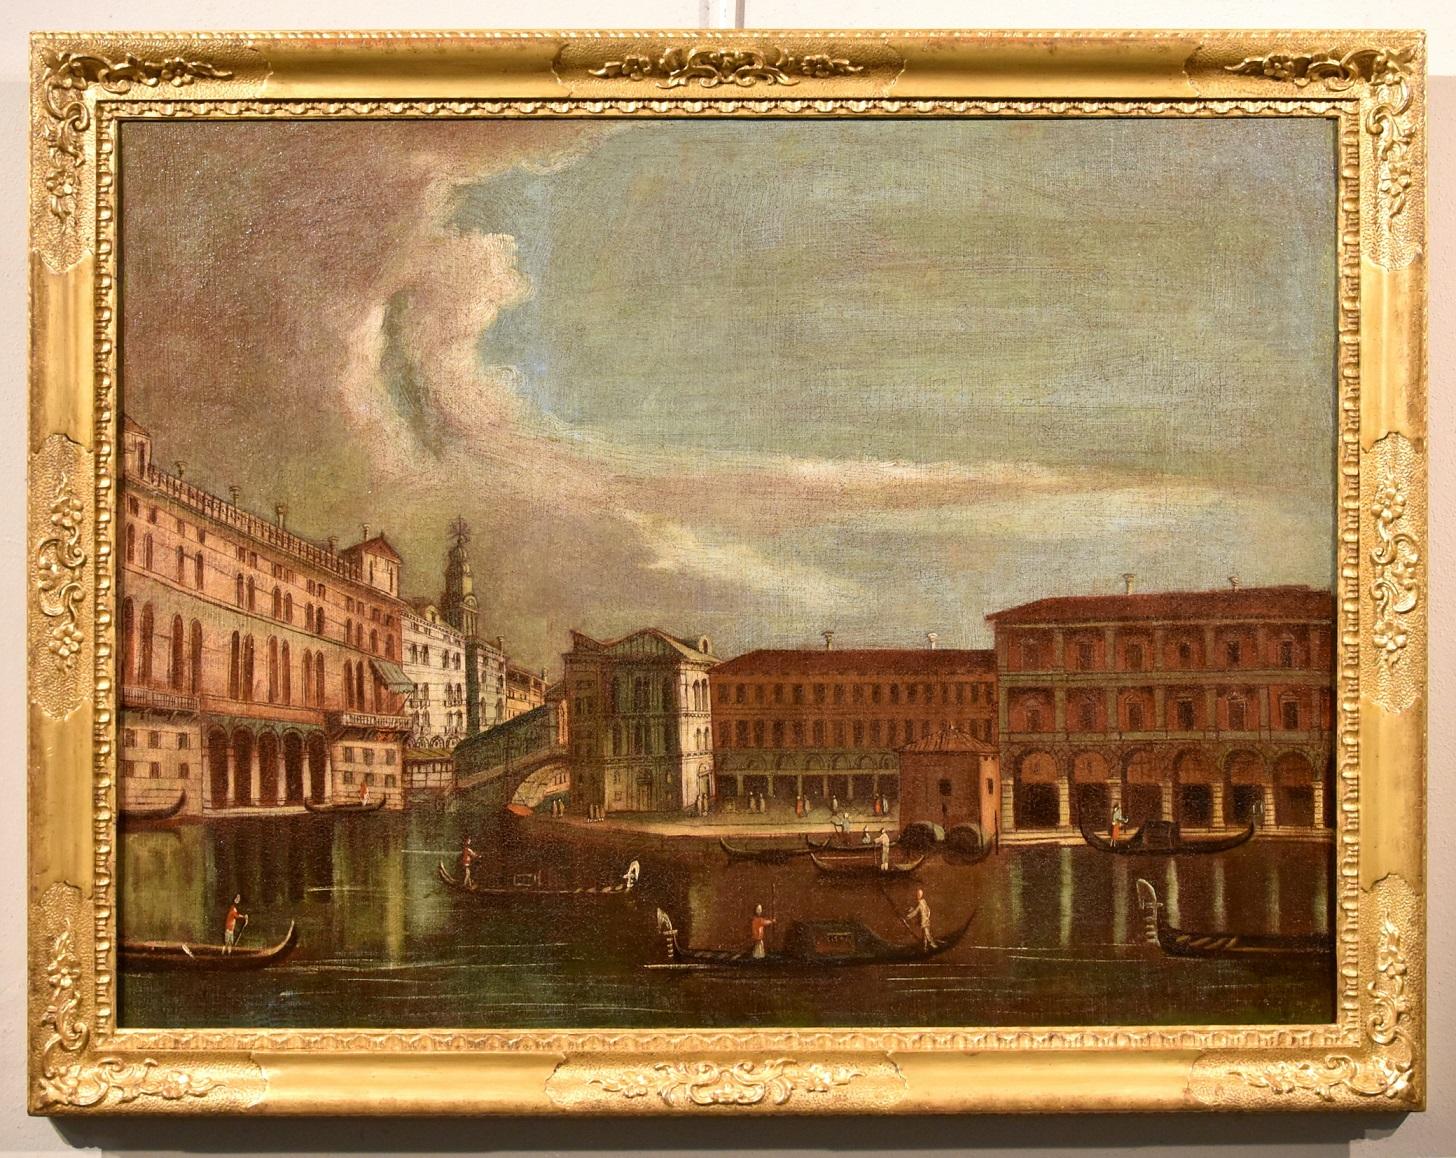 Francesco Tironi (Venice, about 1745 - 1797) Landscape Painting - Tironi Venice Grand Canal Landscape Paint Oil on canvas Old master 18th Century